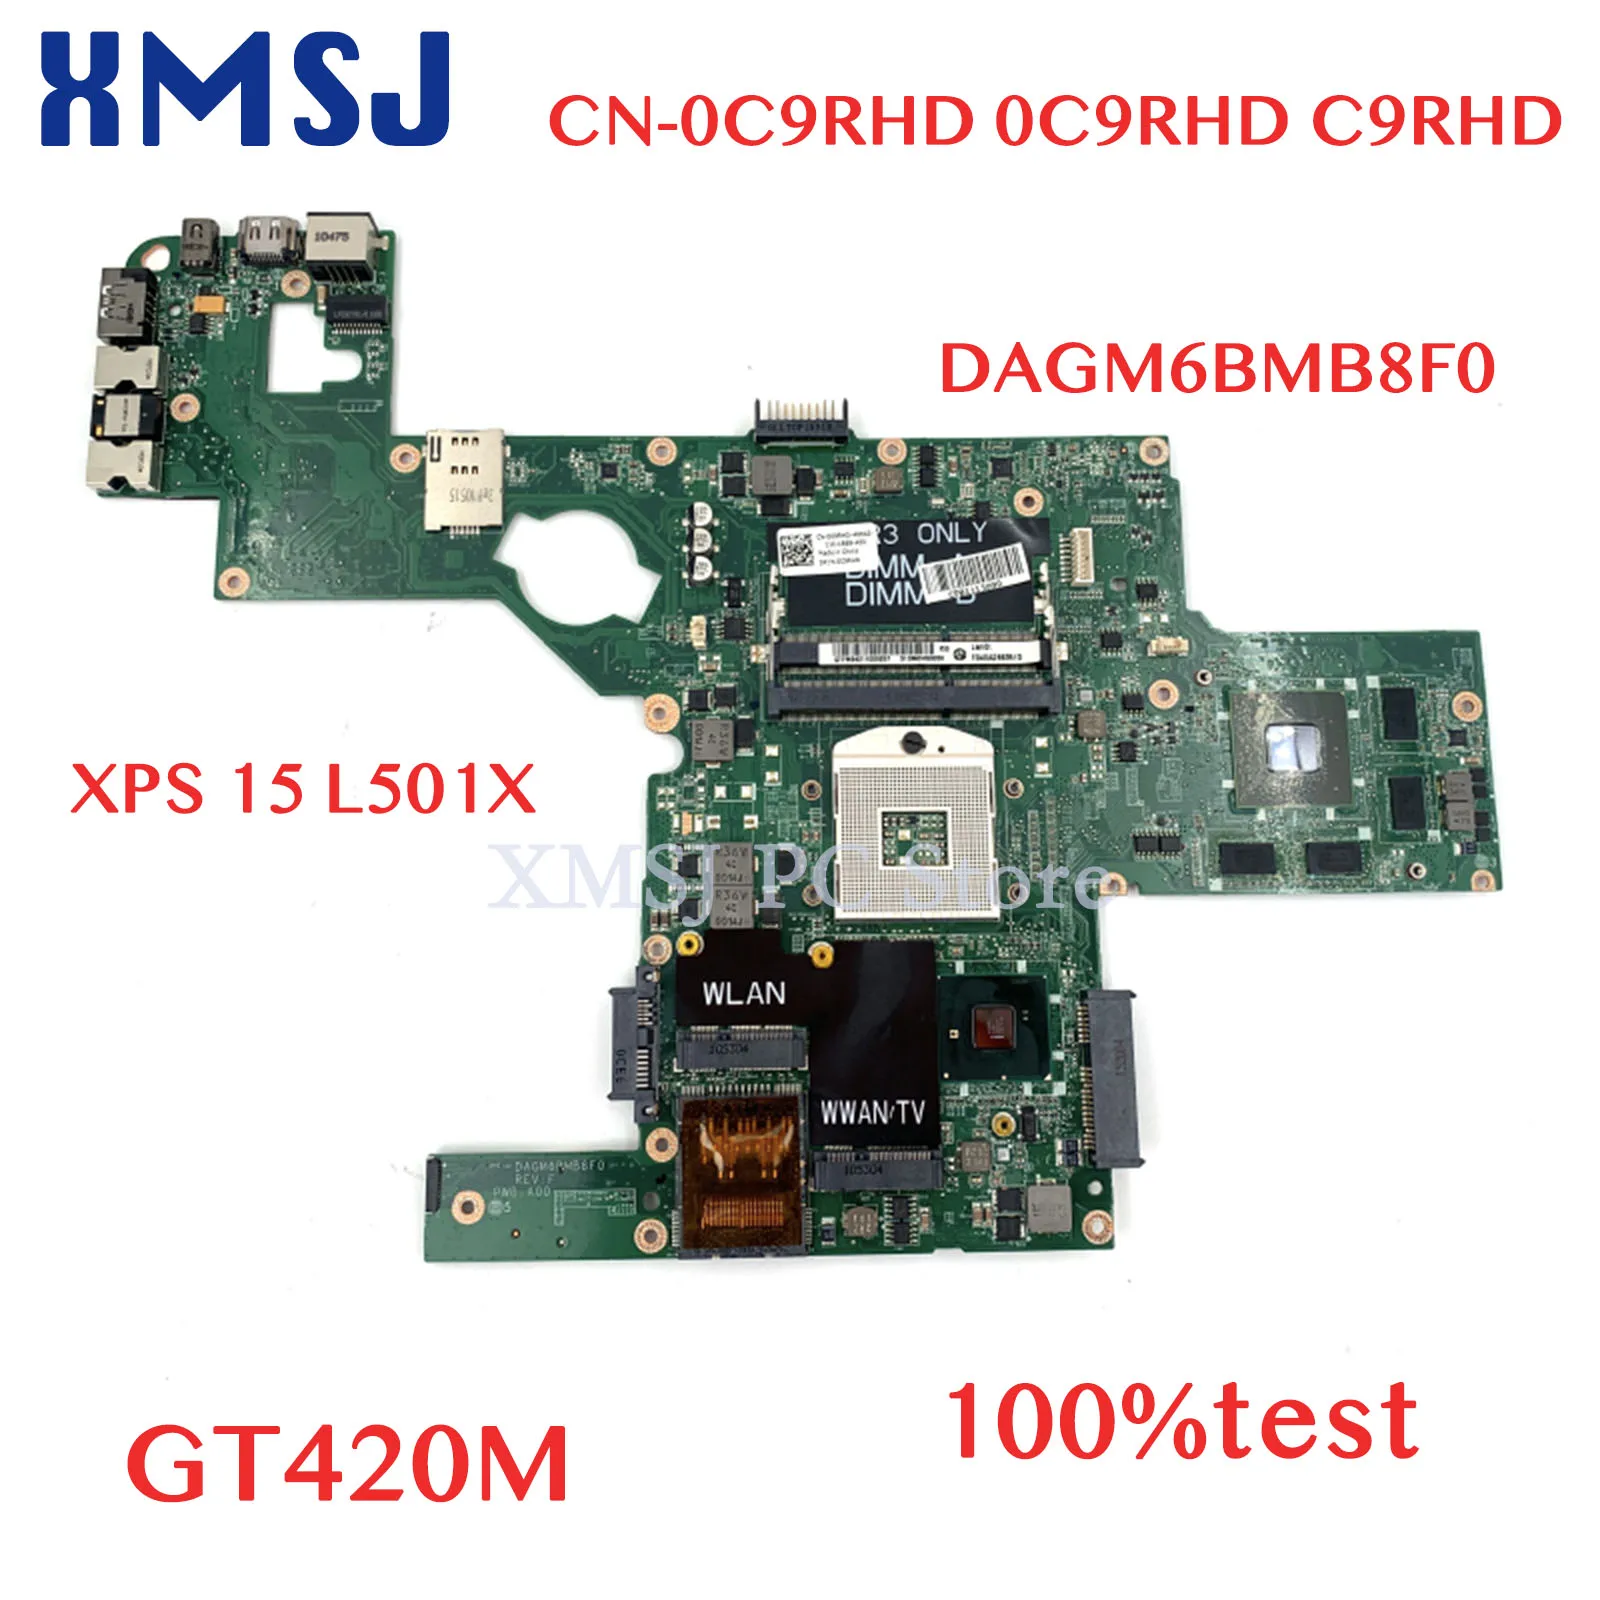 XMSJ For Dell XPS 15 L501X DAGM6BMB8F0 CN-0C9RHD 0C9RHD C9RHD Laptop Motherboard HM57 DDR3 GT420M GPU Main board Free CPU